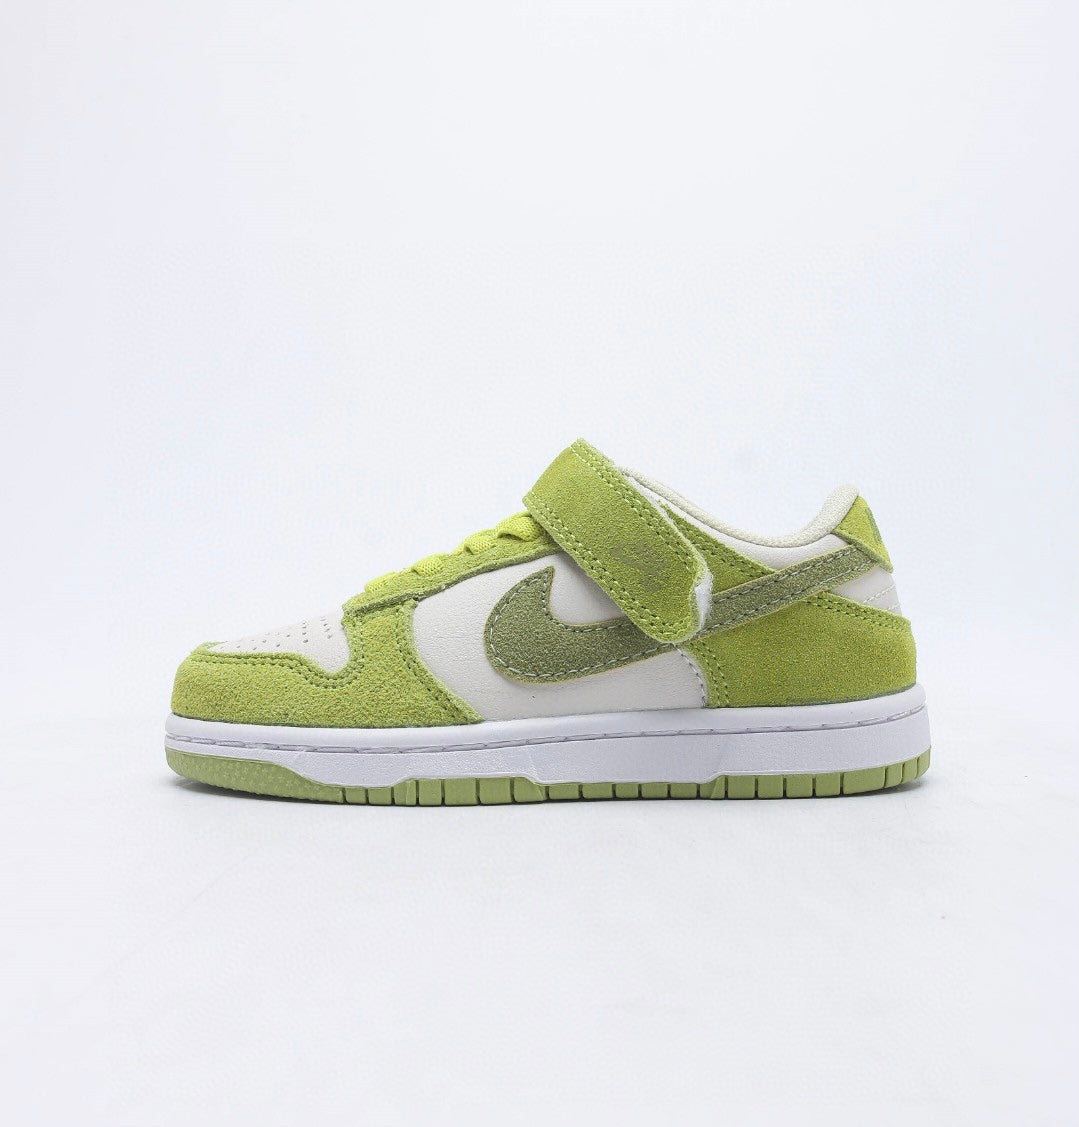 Nike SB zoom dunk high green shoes